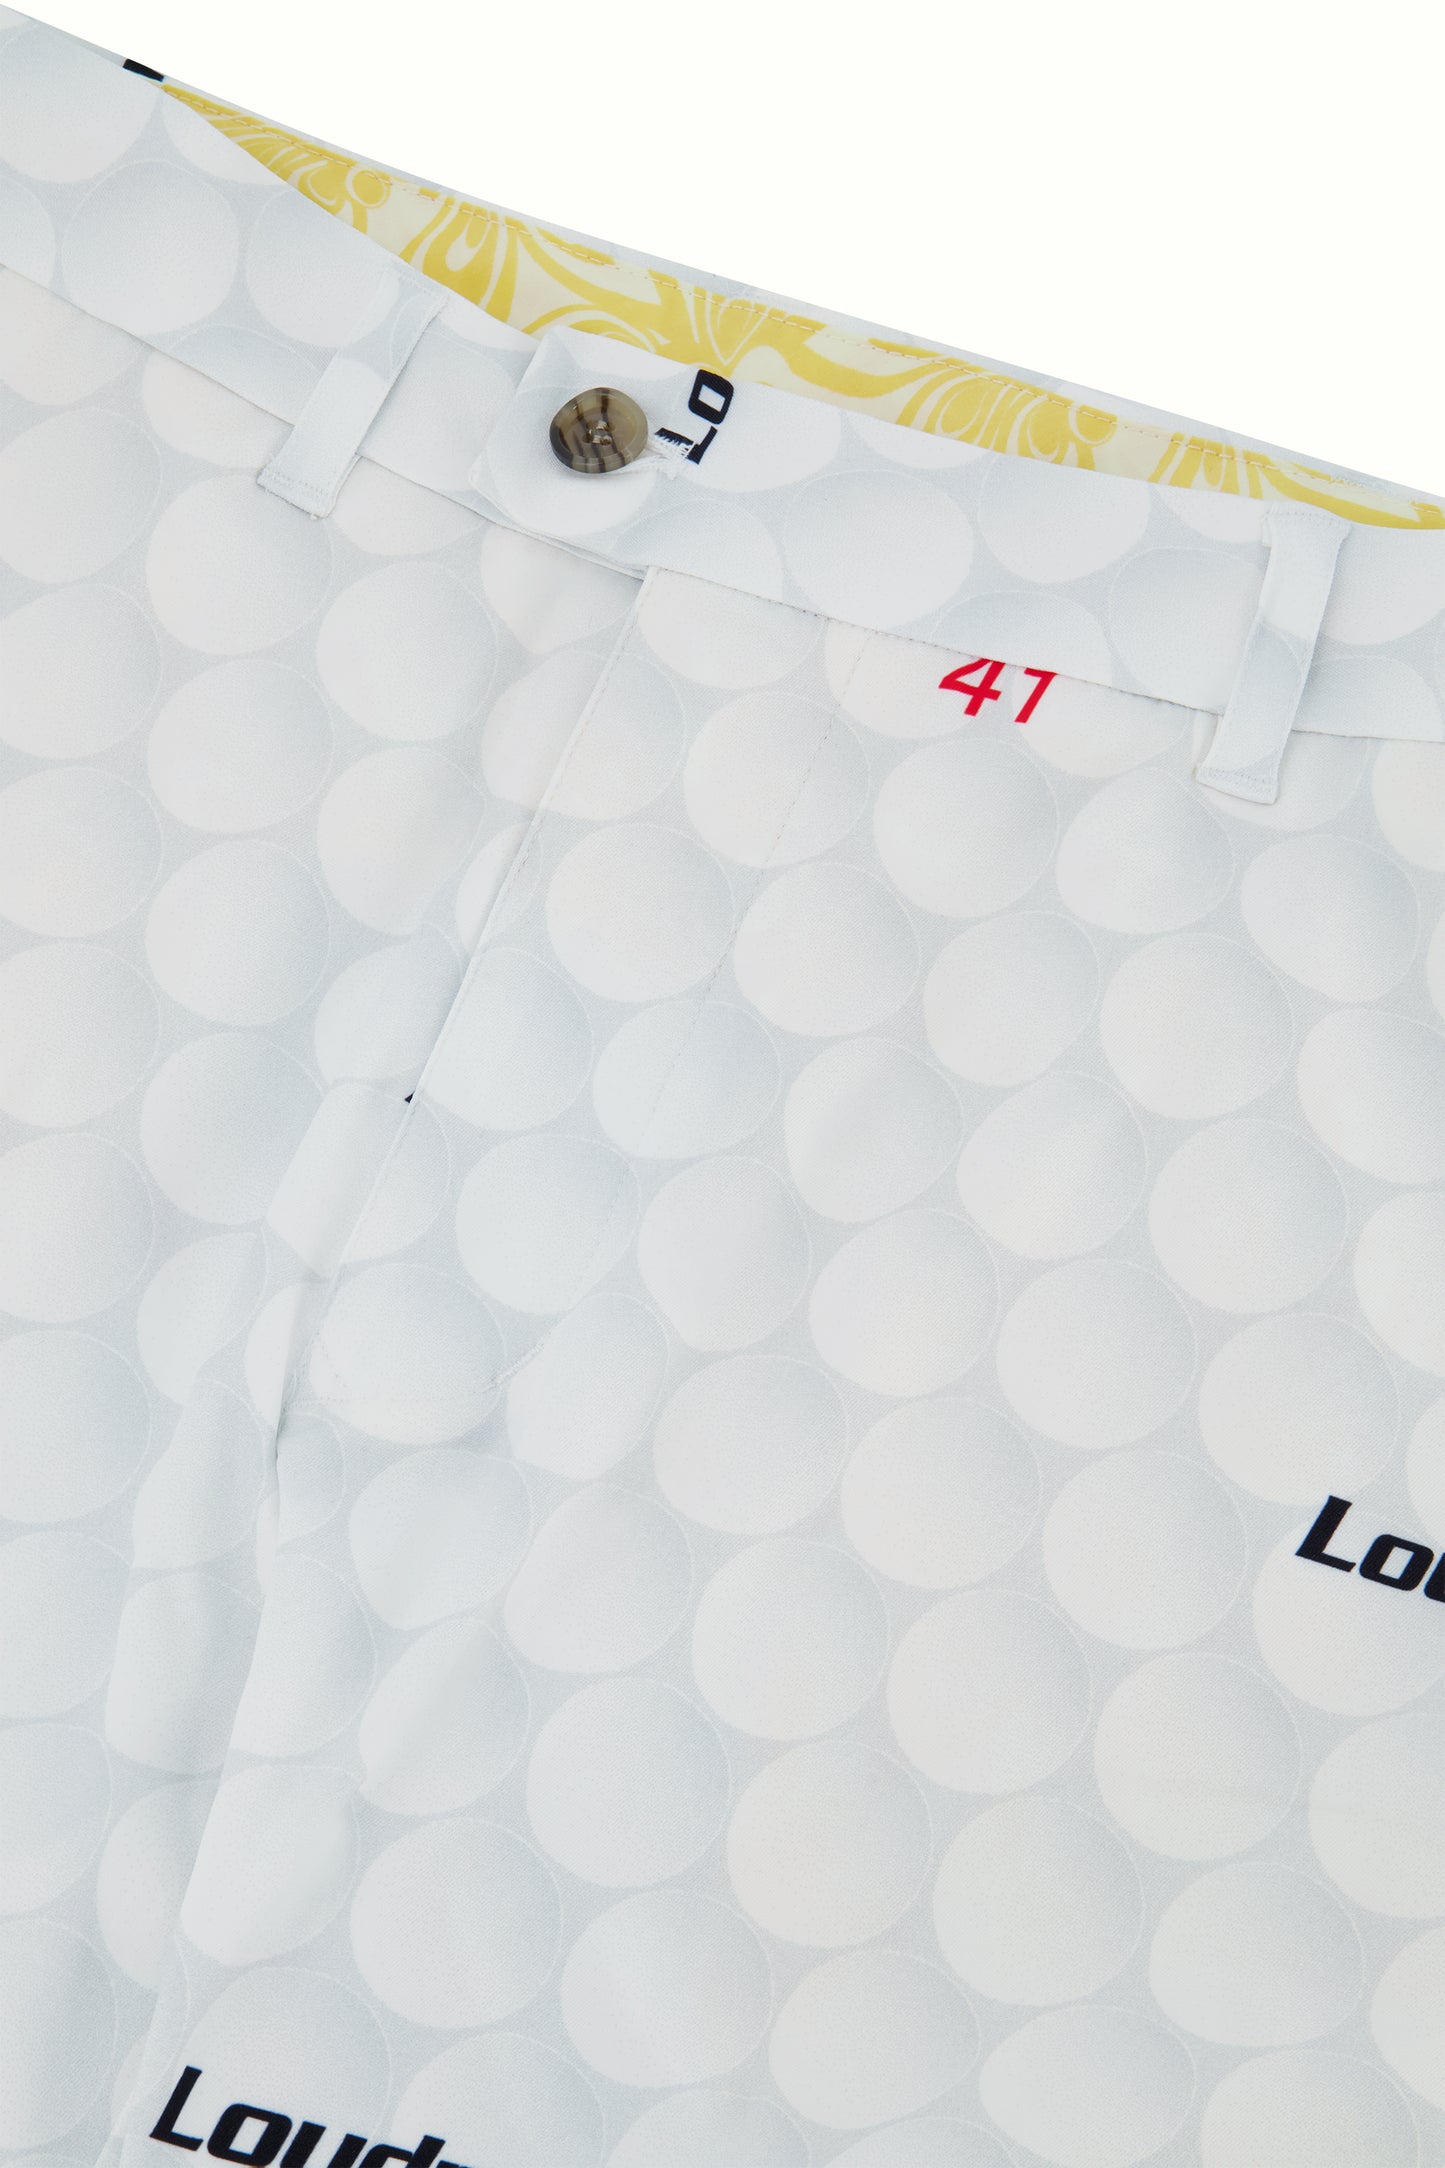 Big Golf Ball Patterned Pants Detail